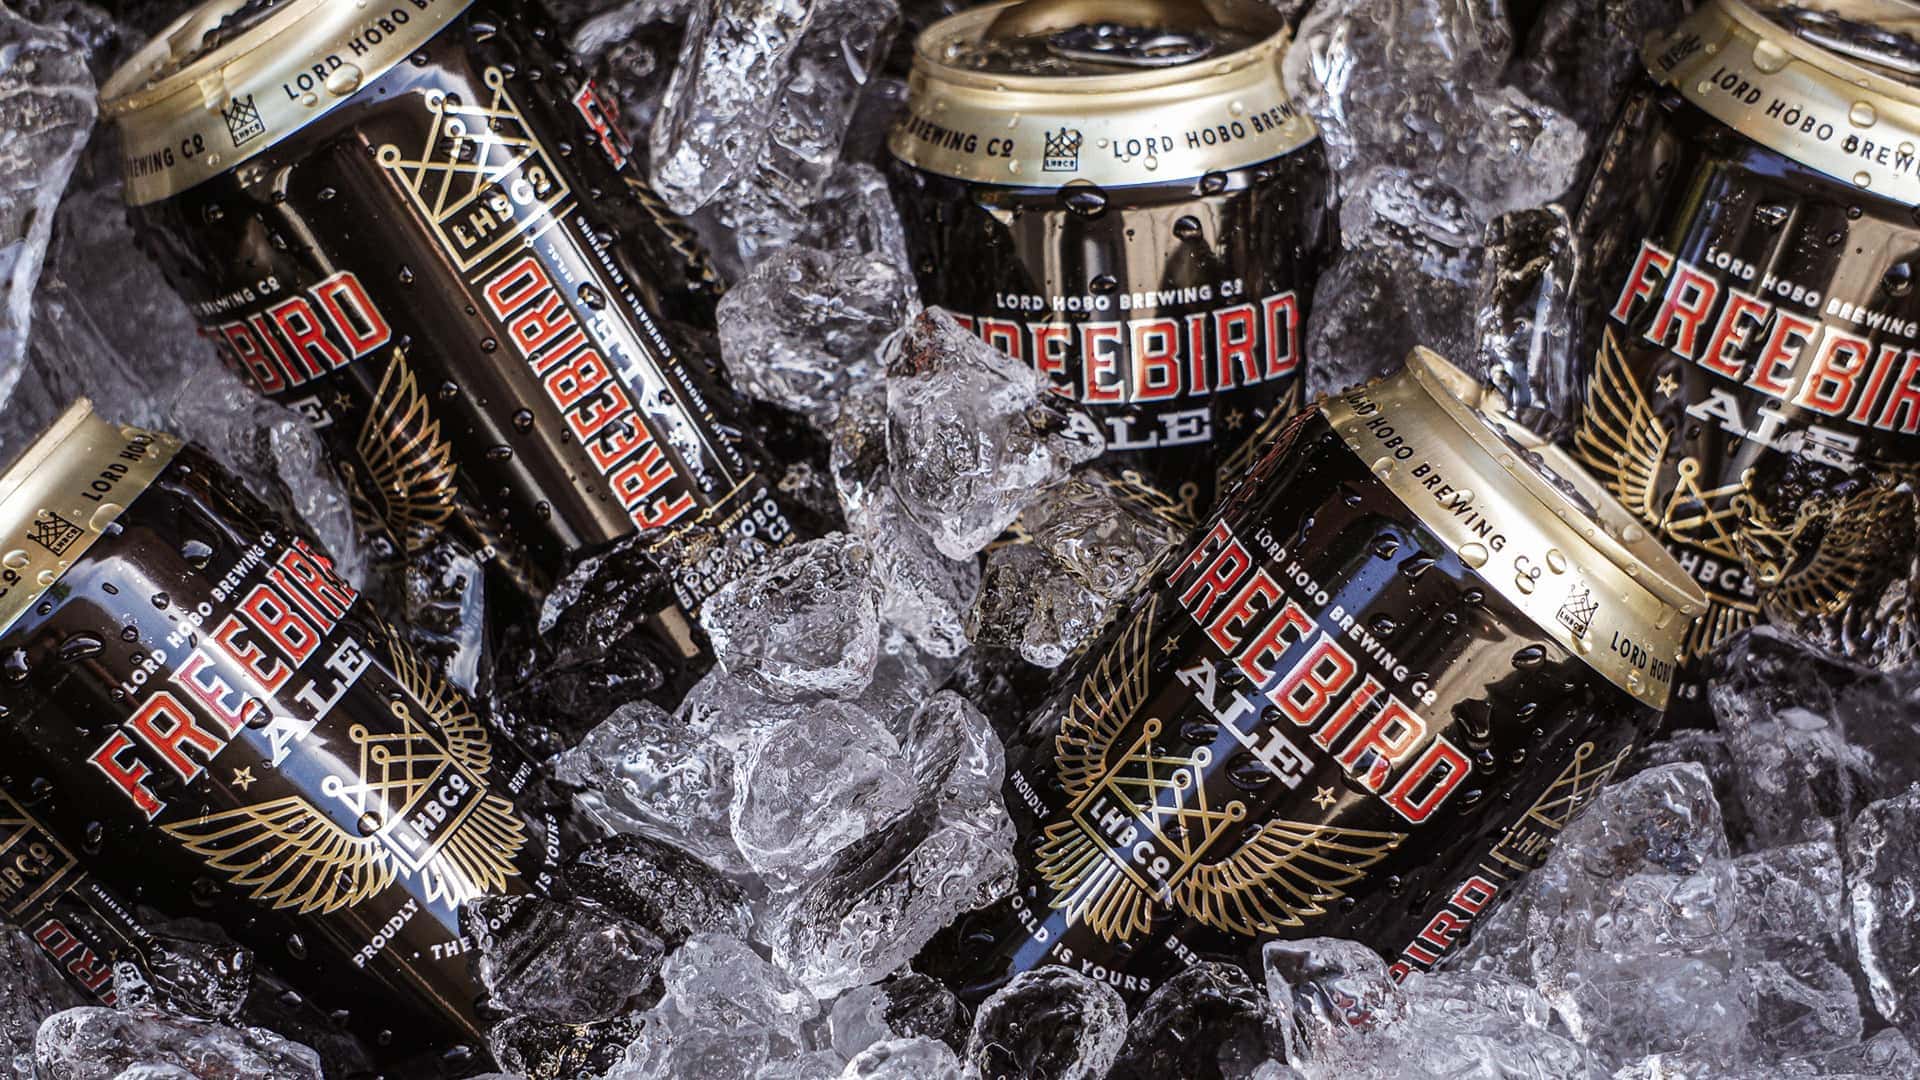 Lord Hobo Brewing Freebird Ale Can Design - Unsung Studio Branding